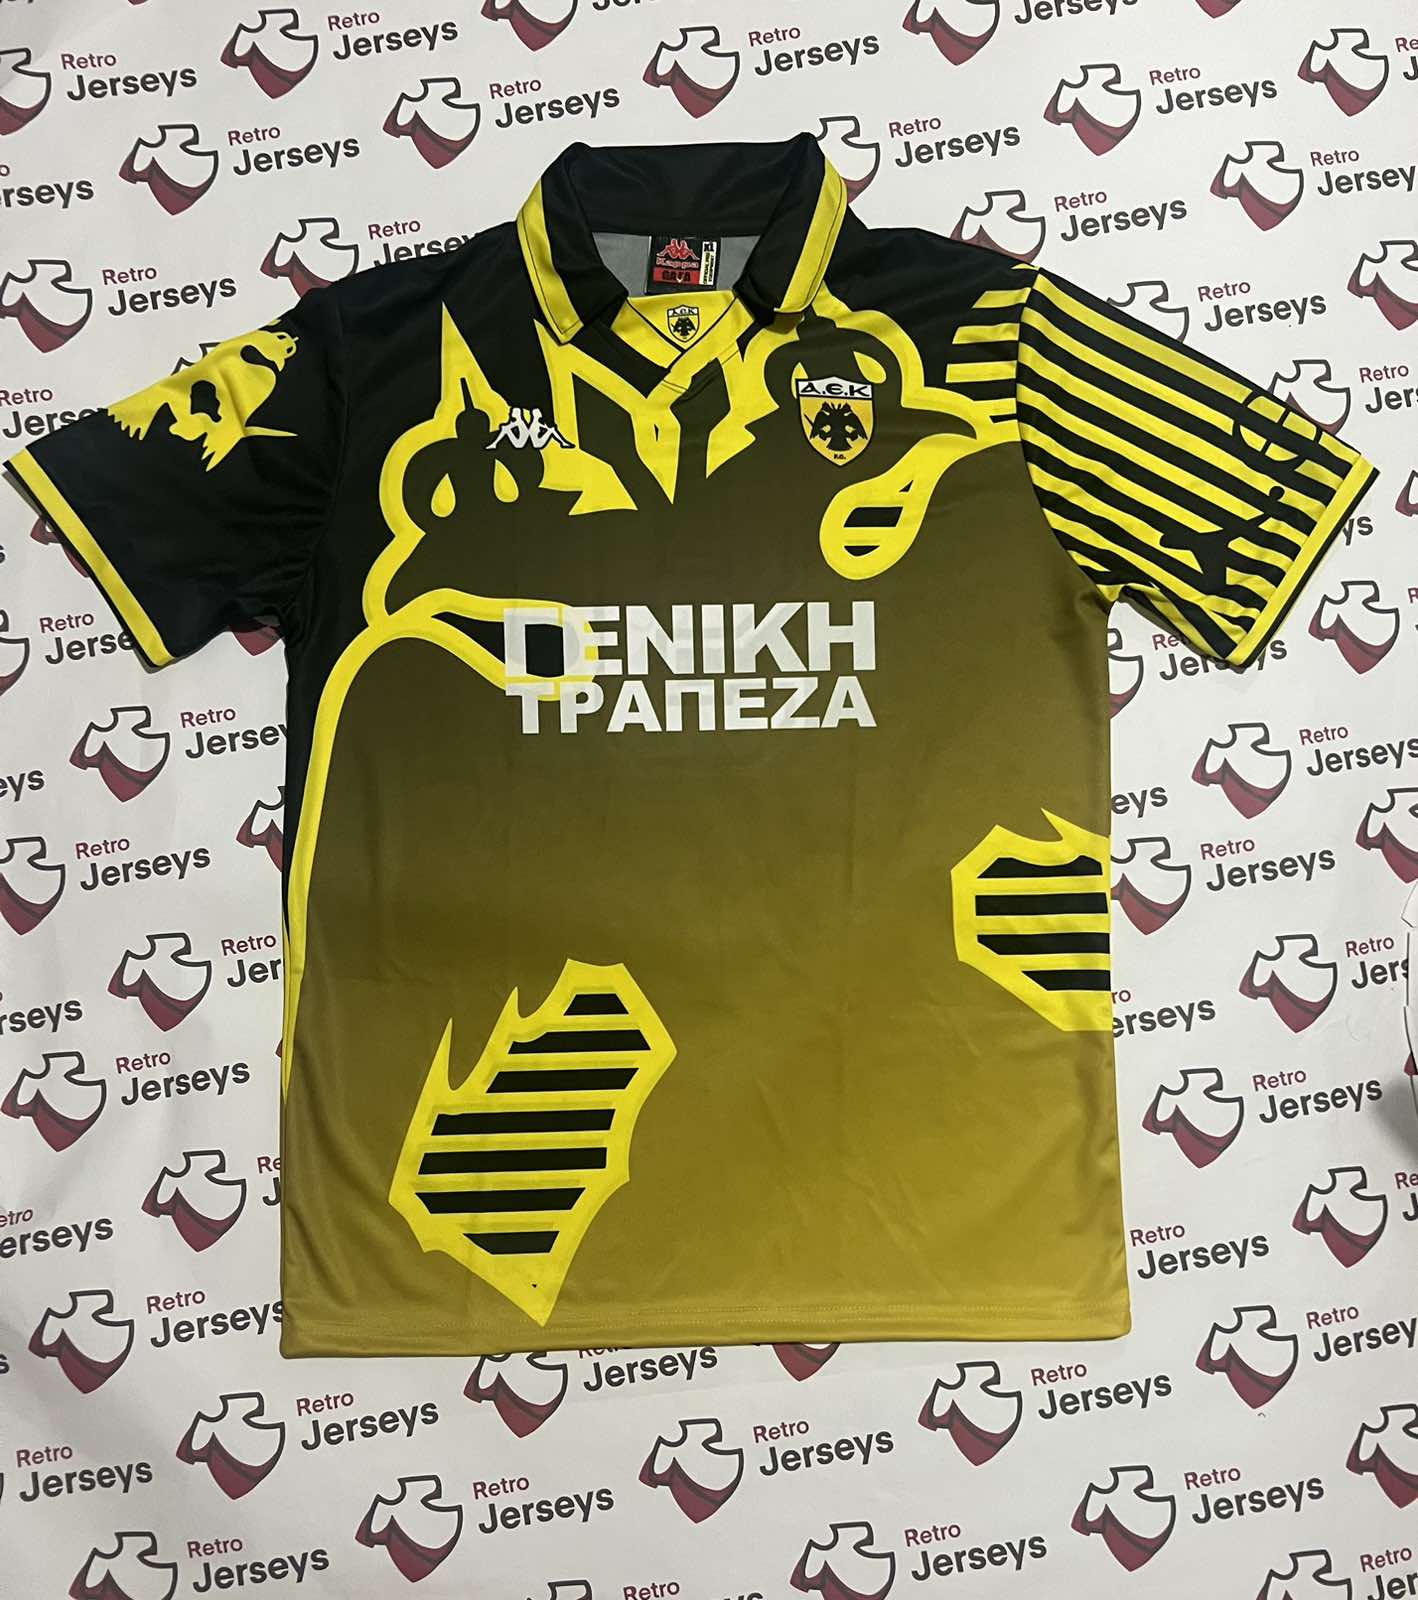 AEK Athens Shirt 1997-1999 Home - Retro Jerseys, φανέλα αεκ - Retro Jerseys